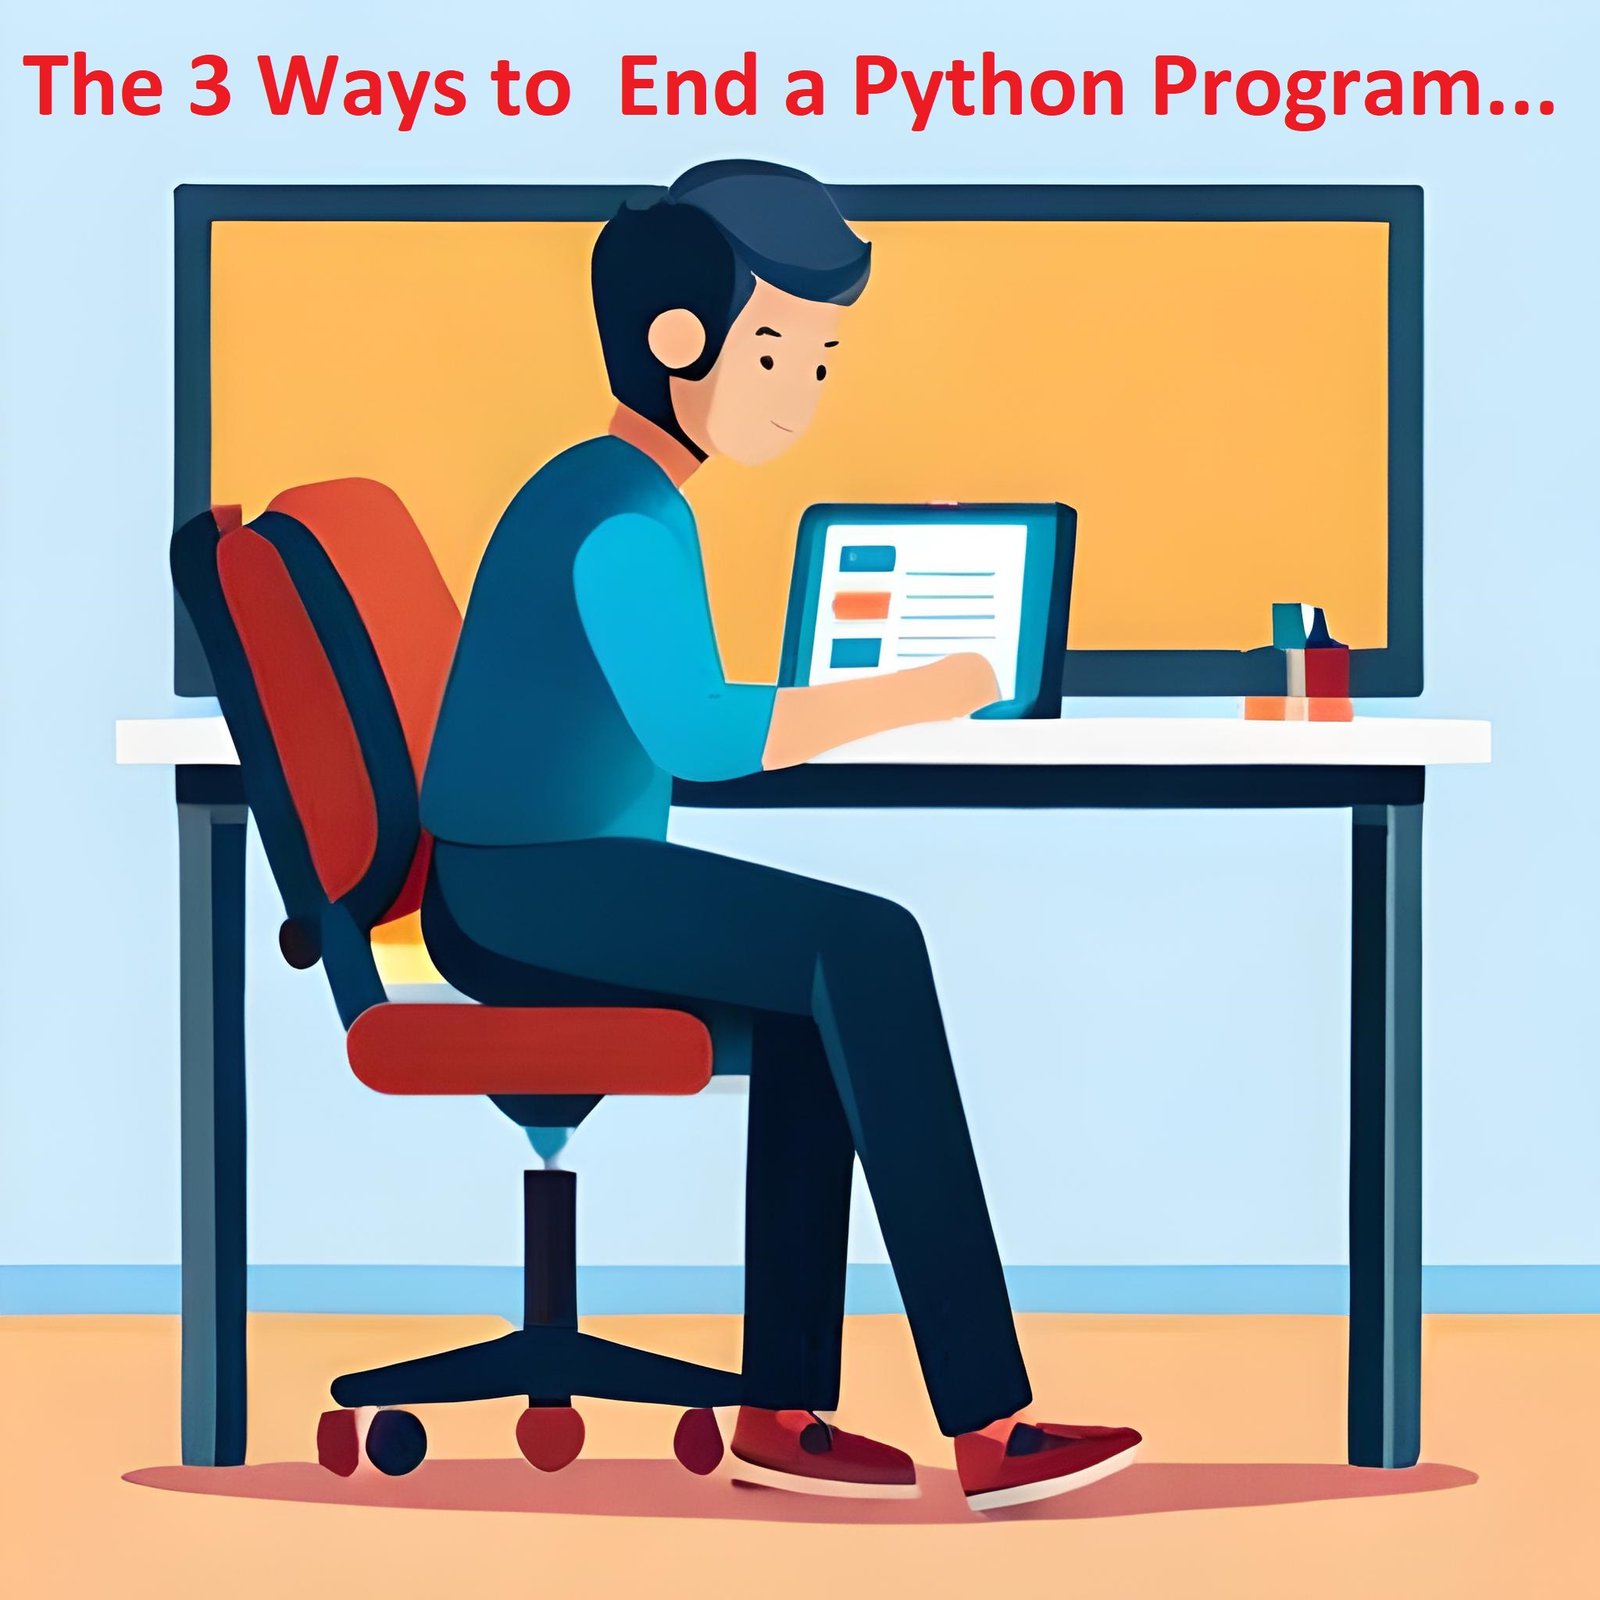 The 3 Ways to End a Python Program